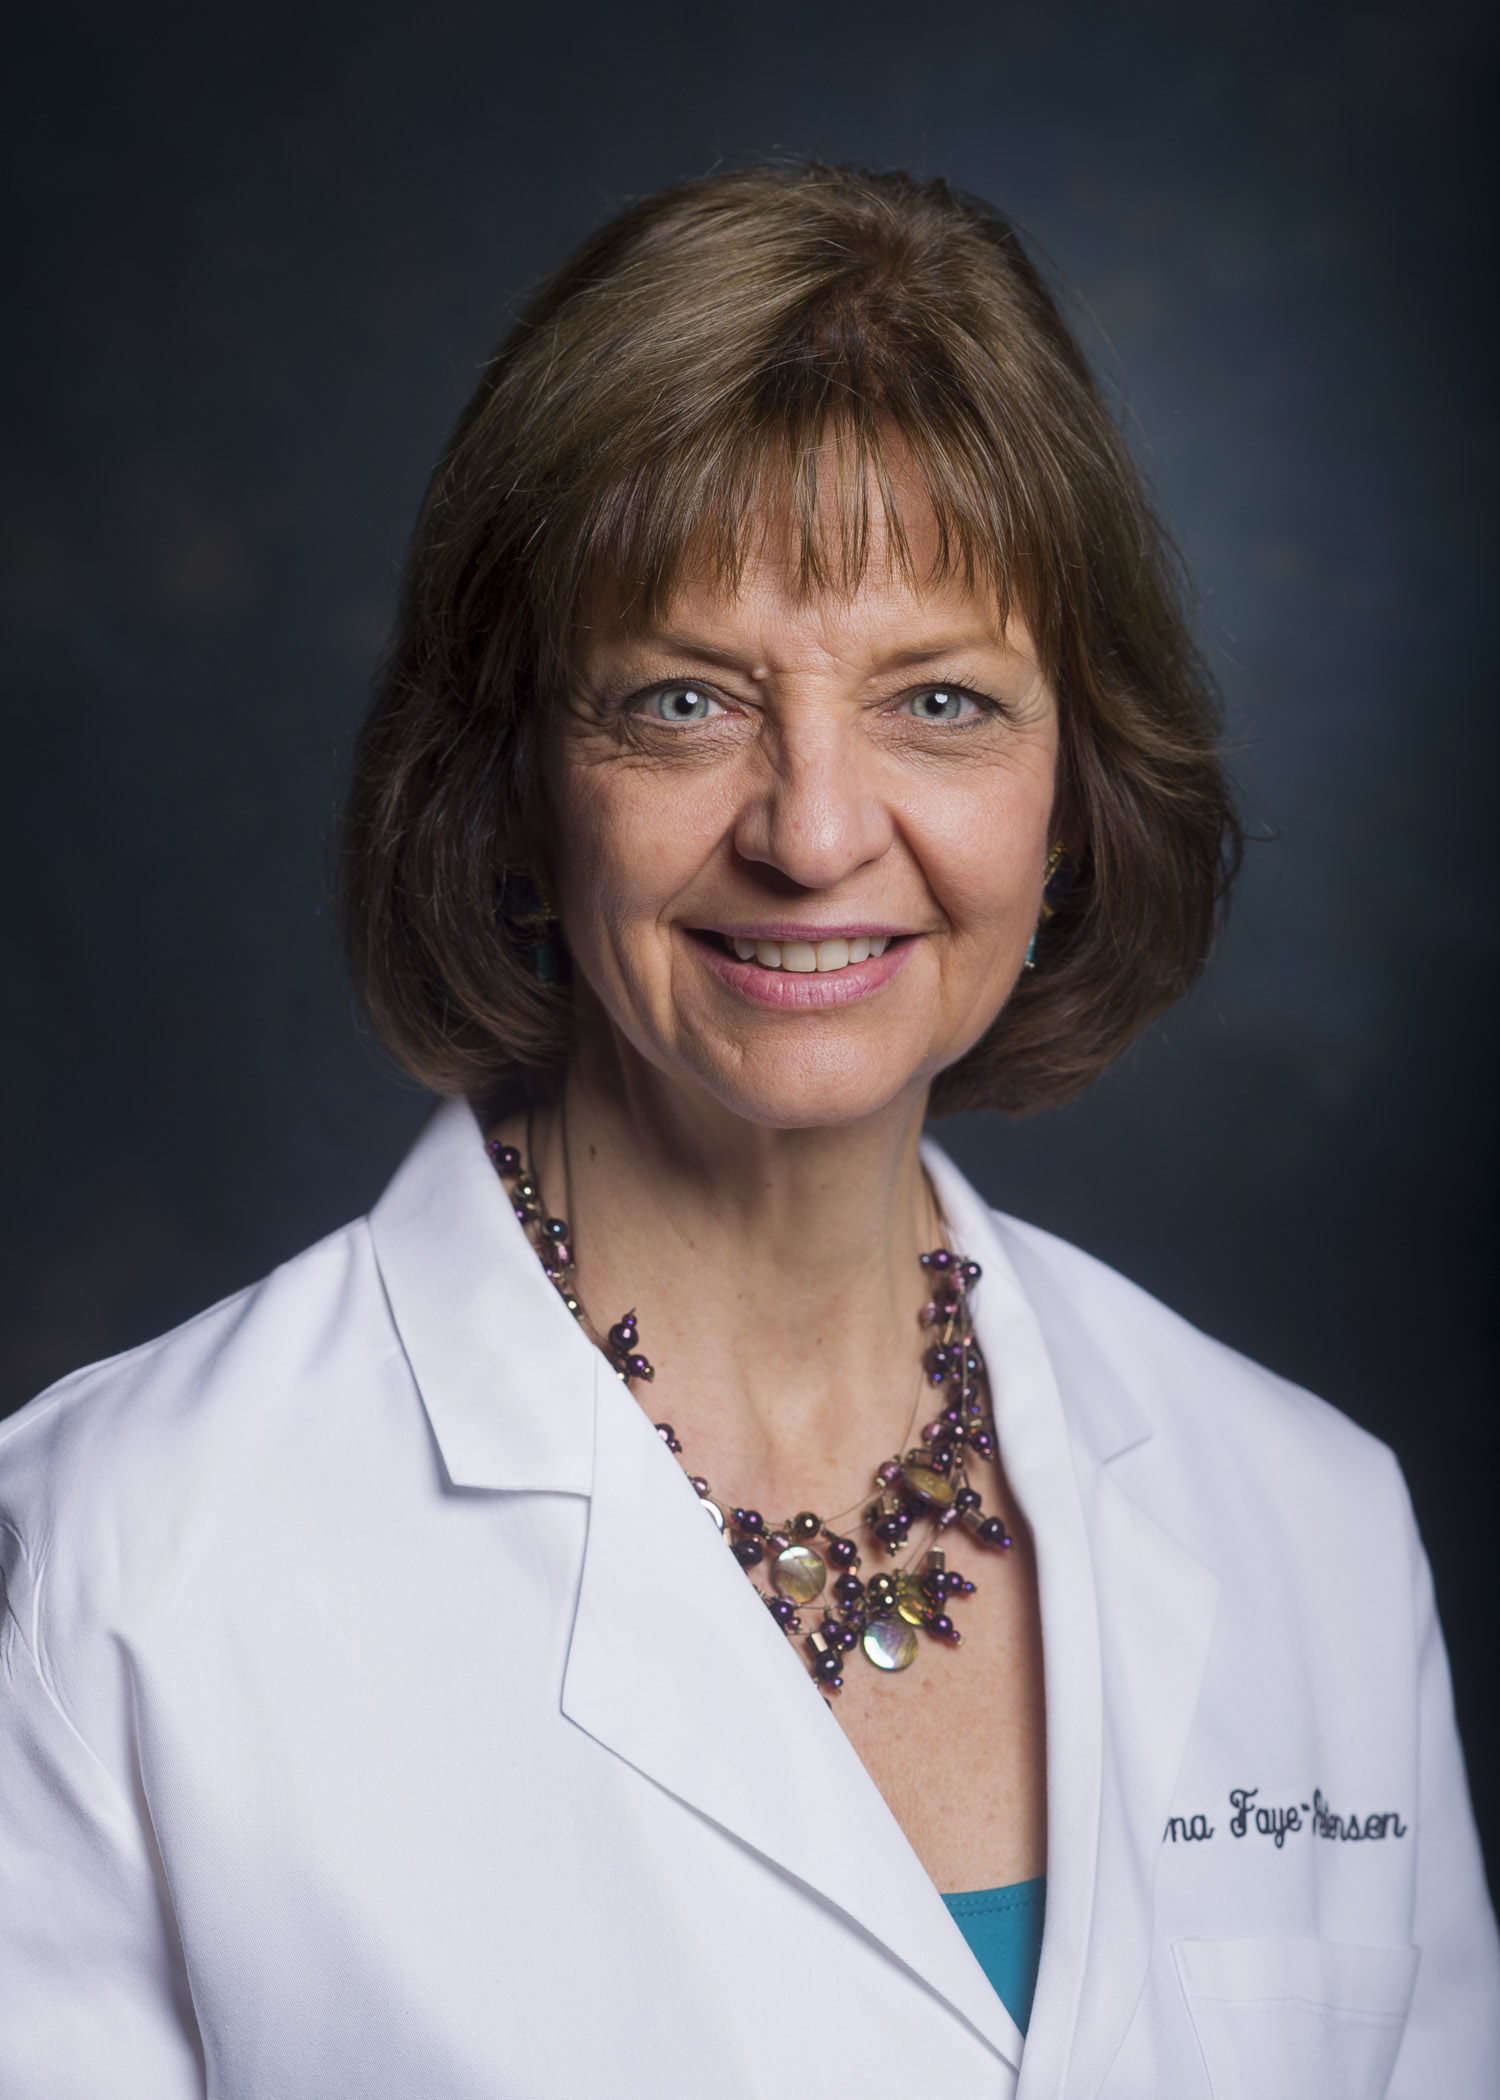 Head shot of Dr. Ona Faye-Petersen, MD (Professor, Anatomic Pathology) in white medical jacket (2013).